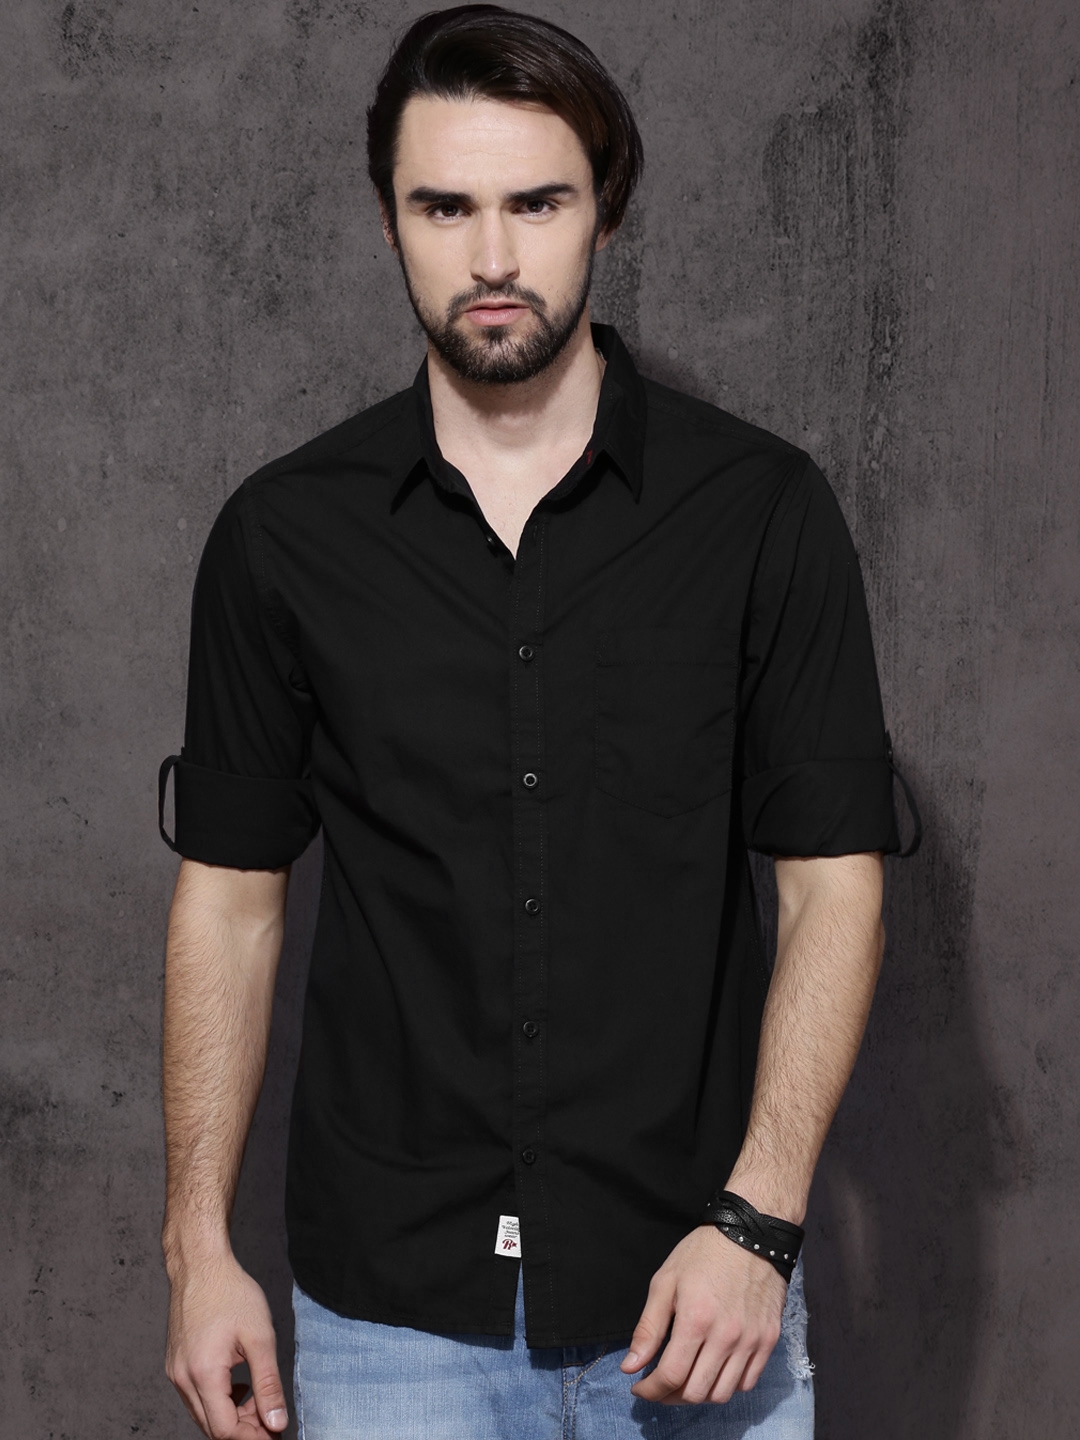 Design Up Black Shirt Men Black Slim Fit Tuxedo Shirt Xl Shirts Shirt